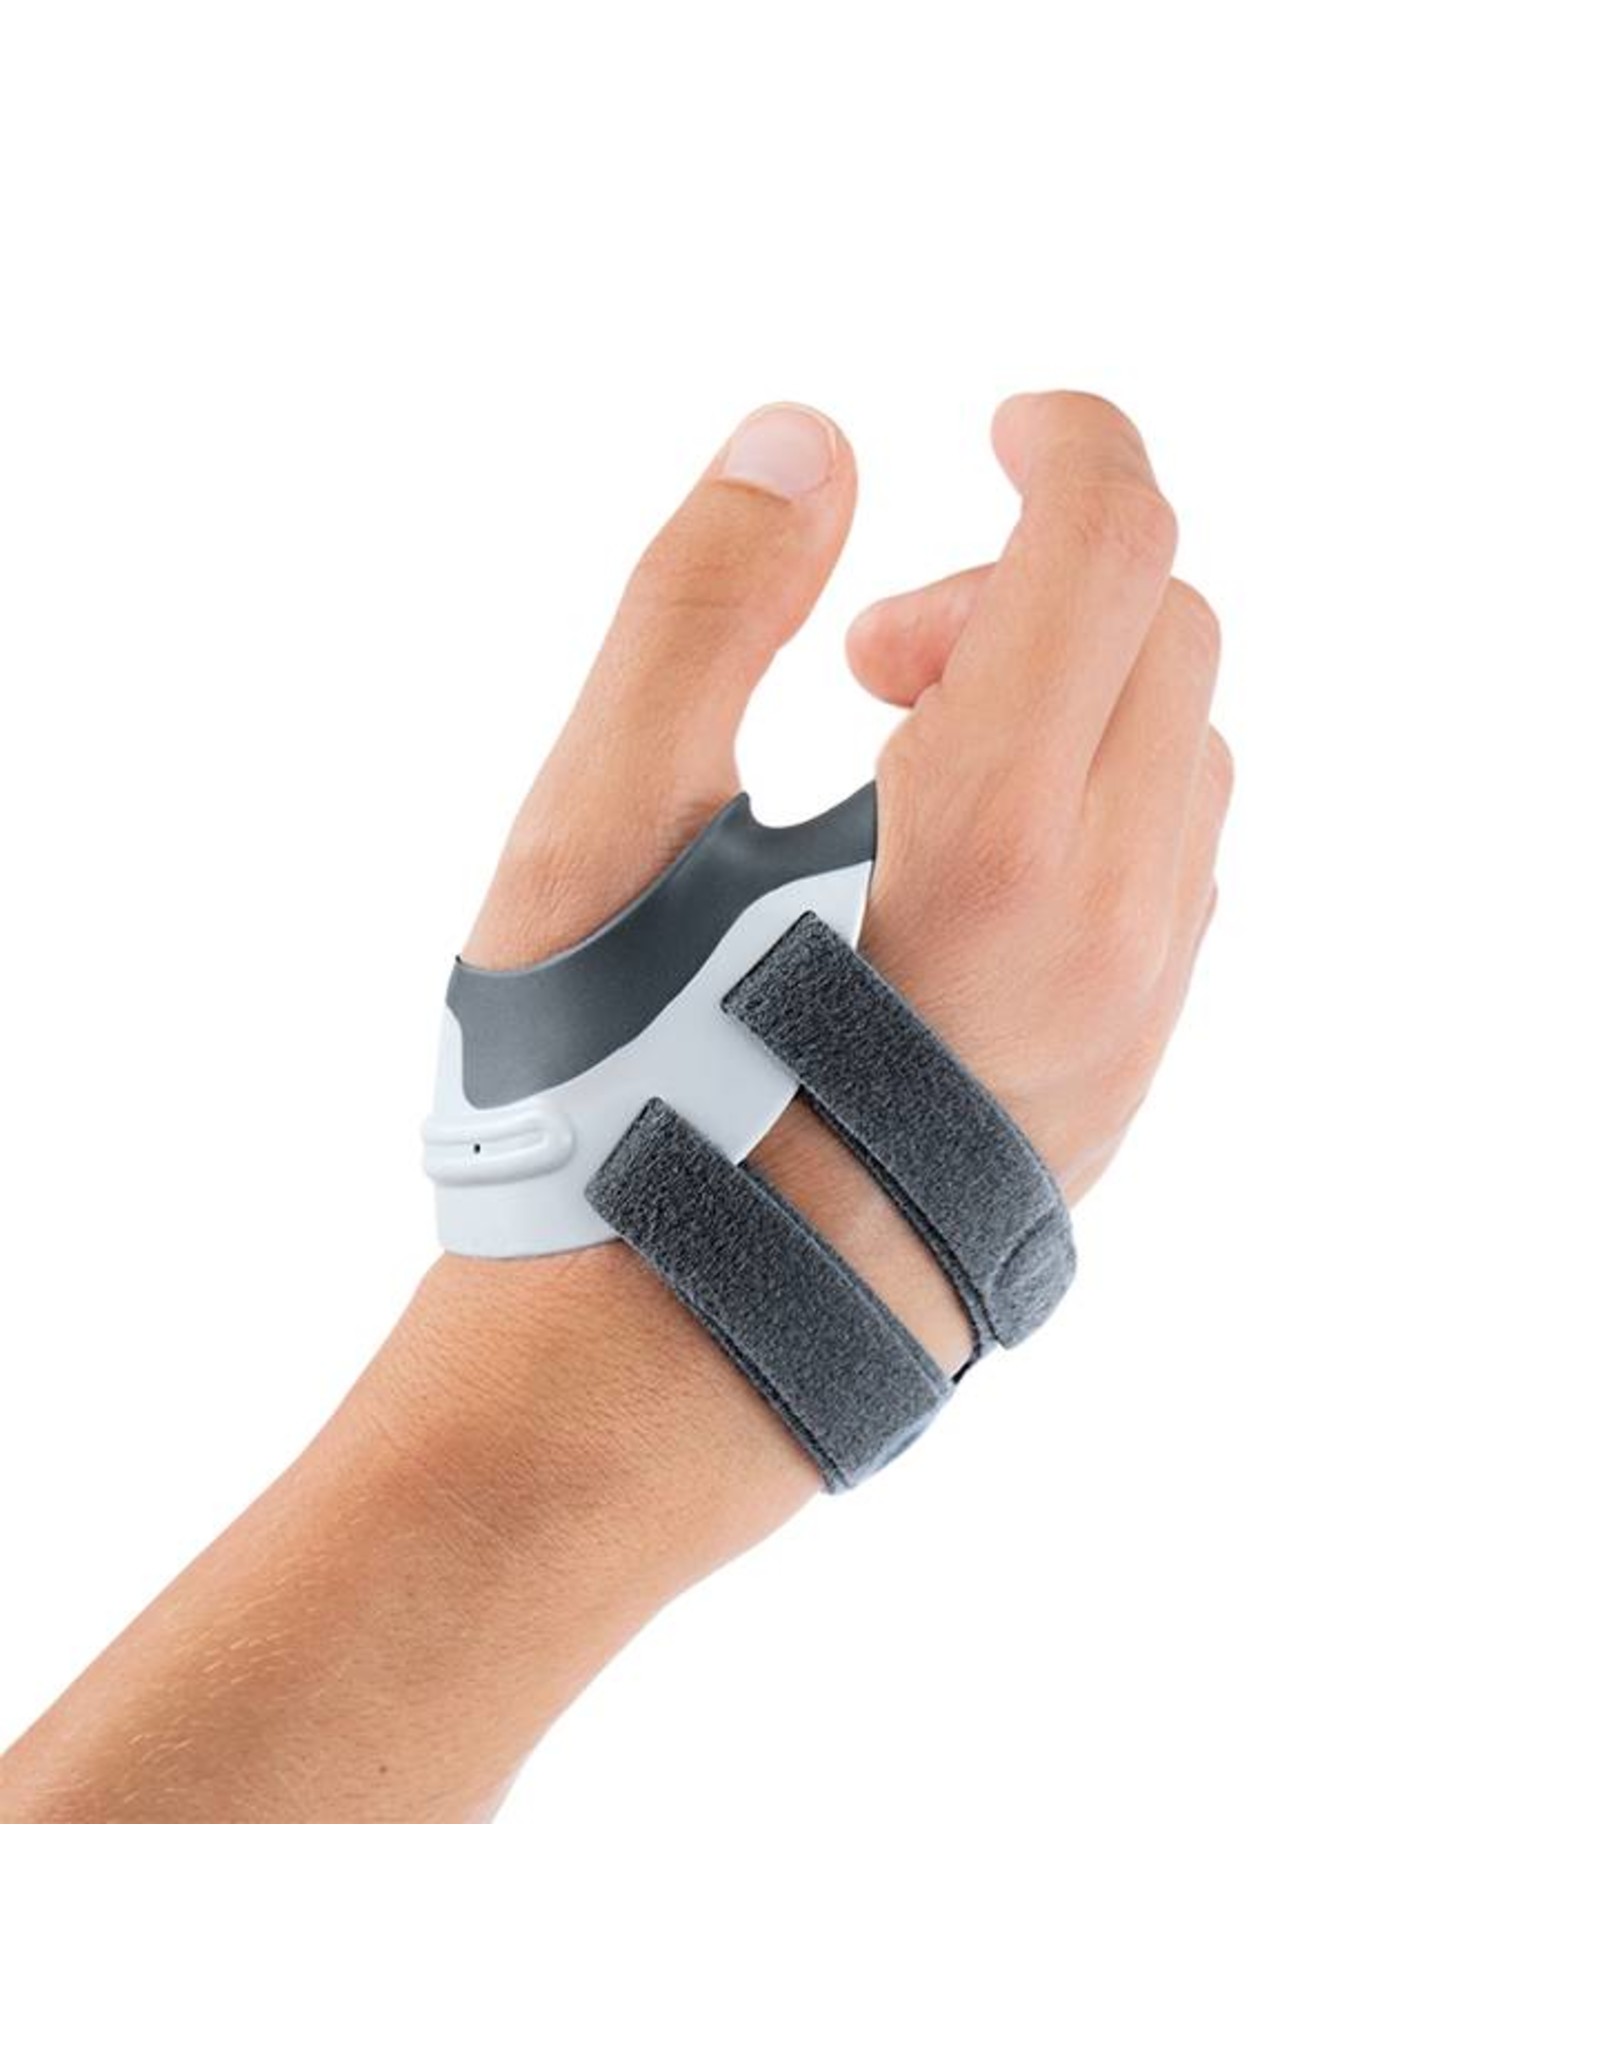 Universal Wrist Brace with Thumb Spica SUGGESTED HCPC: L3807 and L3809 -  Advanced Orthopaedics